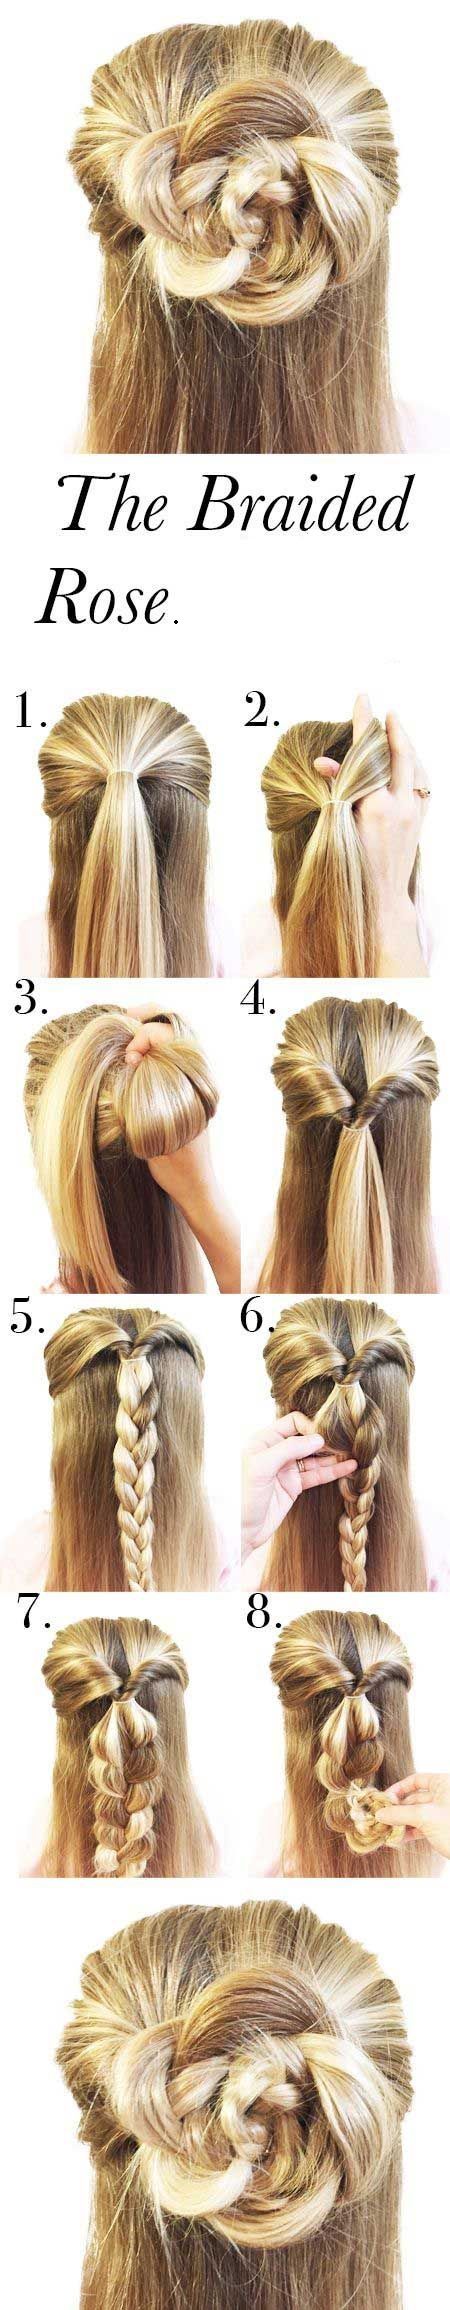 braided hairstyles braid flower rose romantic hairstyle